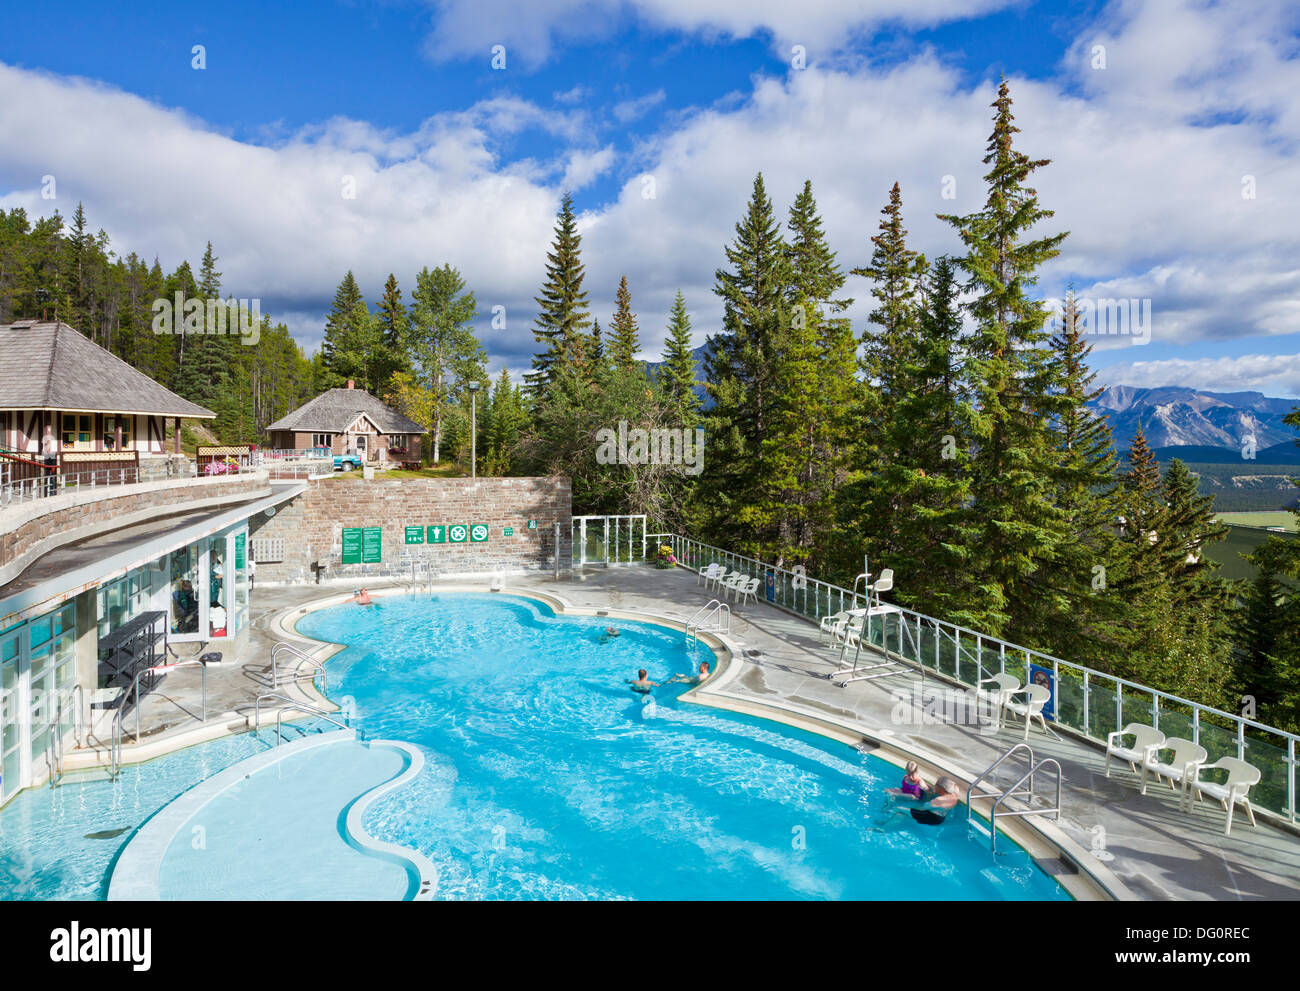 Les gens dans l'eau chaude à la piscine Banff Upper Hot Springs de Banff National Park Alberta canton canada Banque D'Images